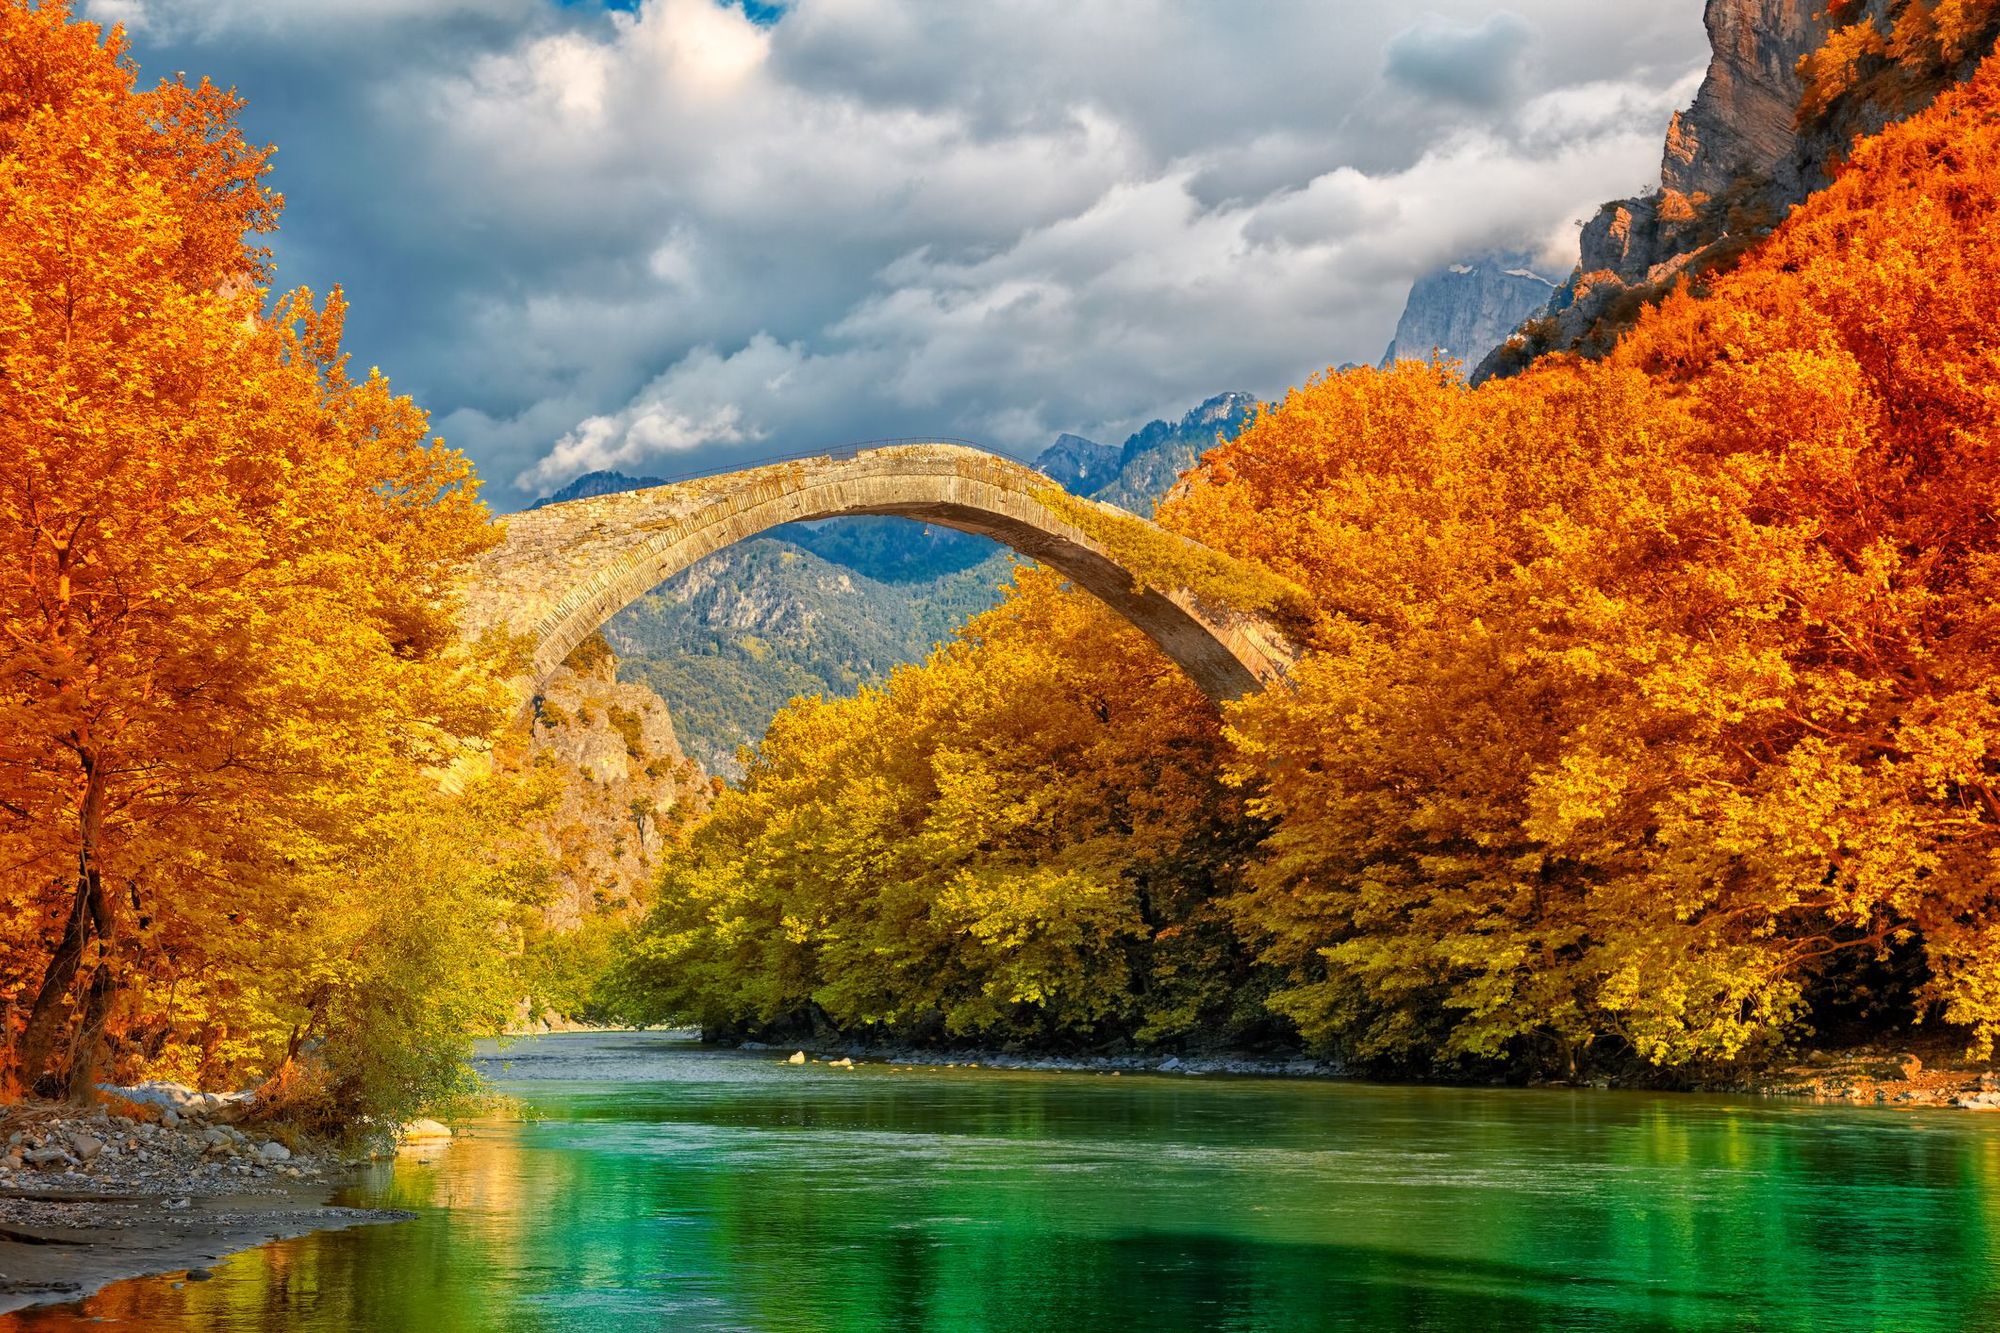 Autumn foliage and stone bridges in Zagori, Greece.